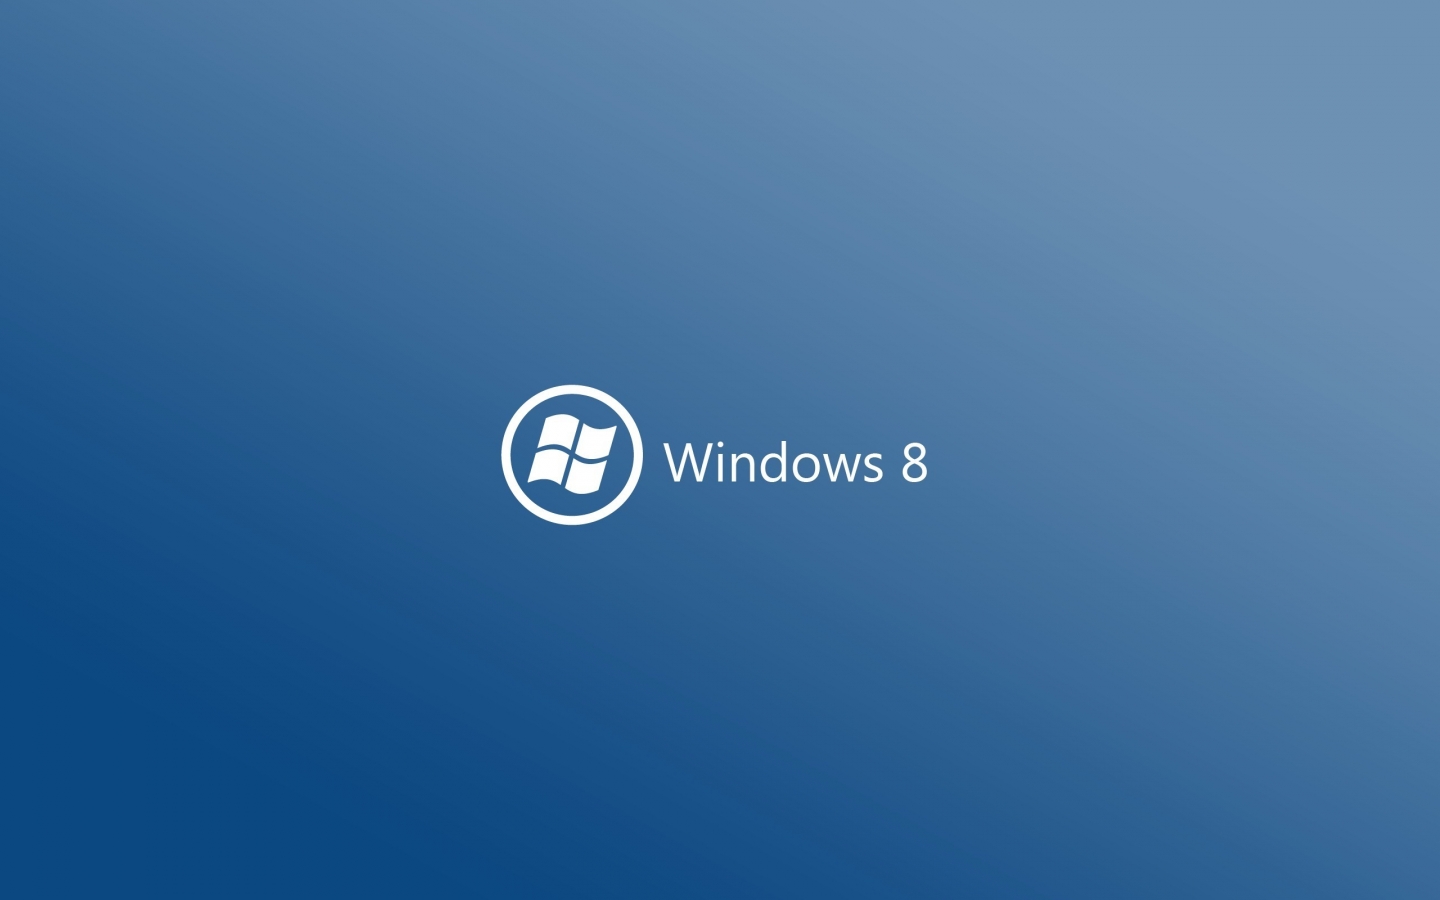 Windows 8 Logo for 1440 x 900 widescreen resolution